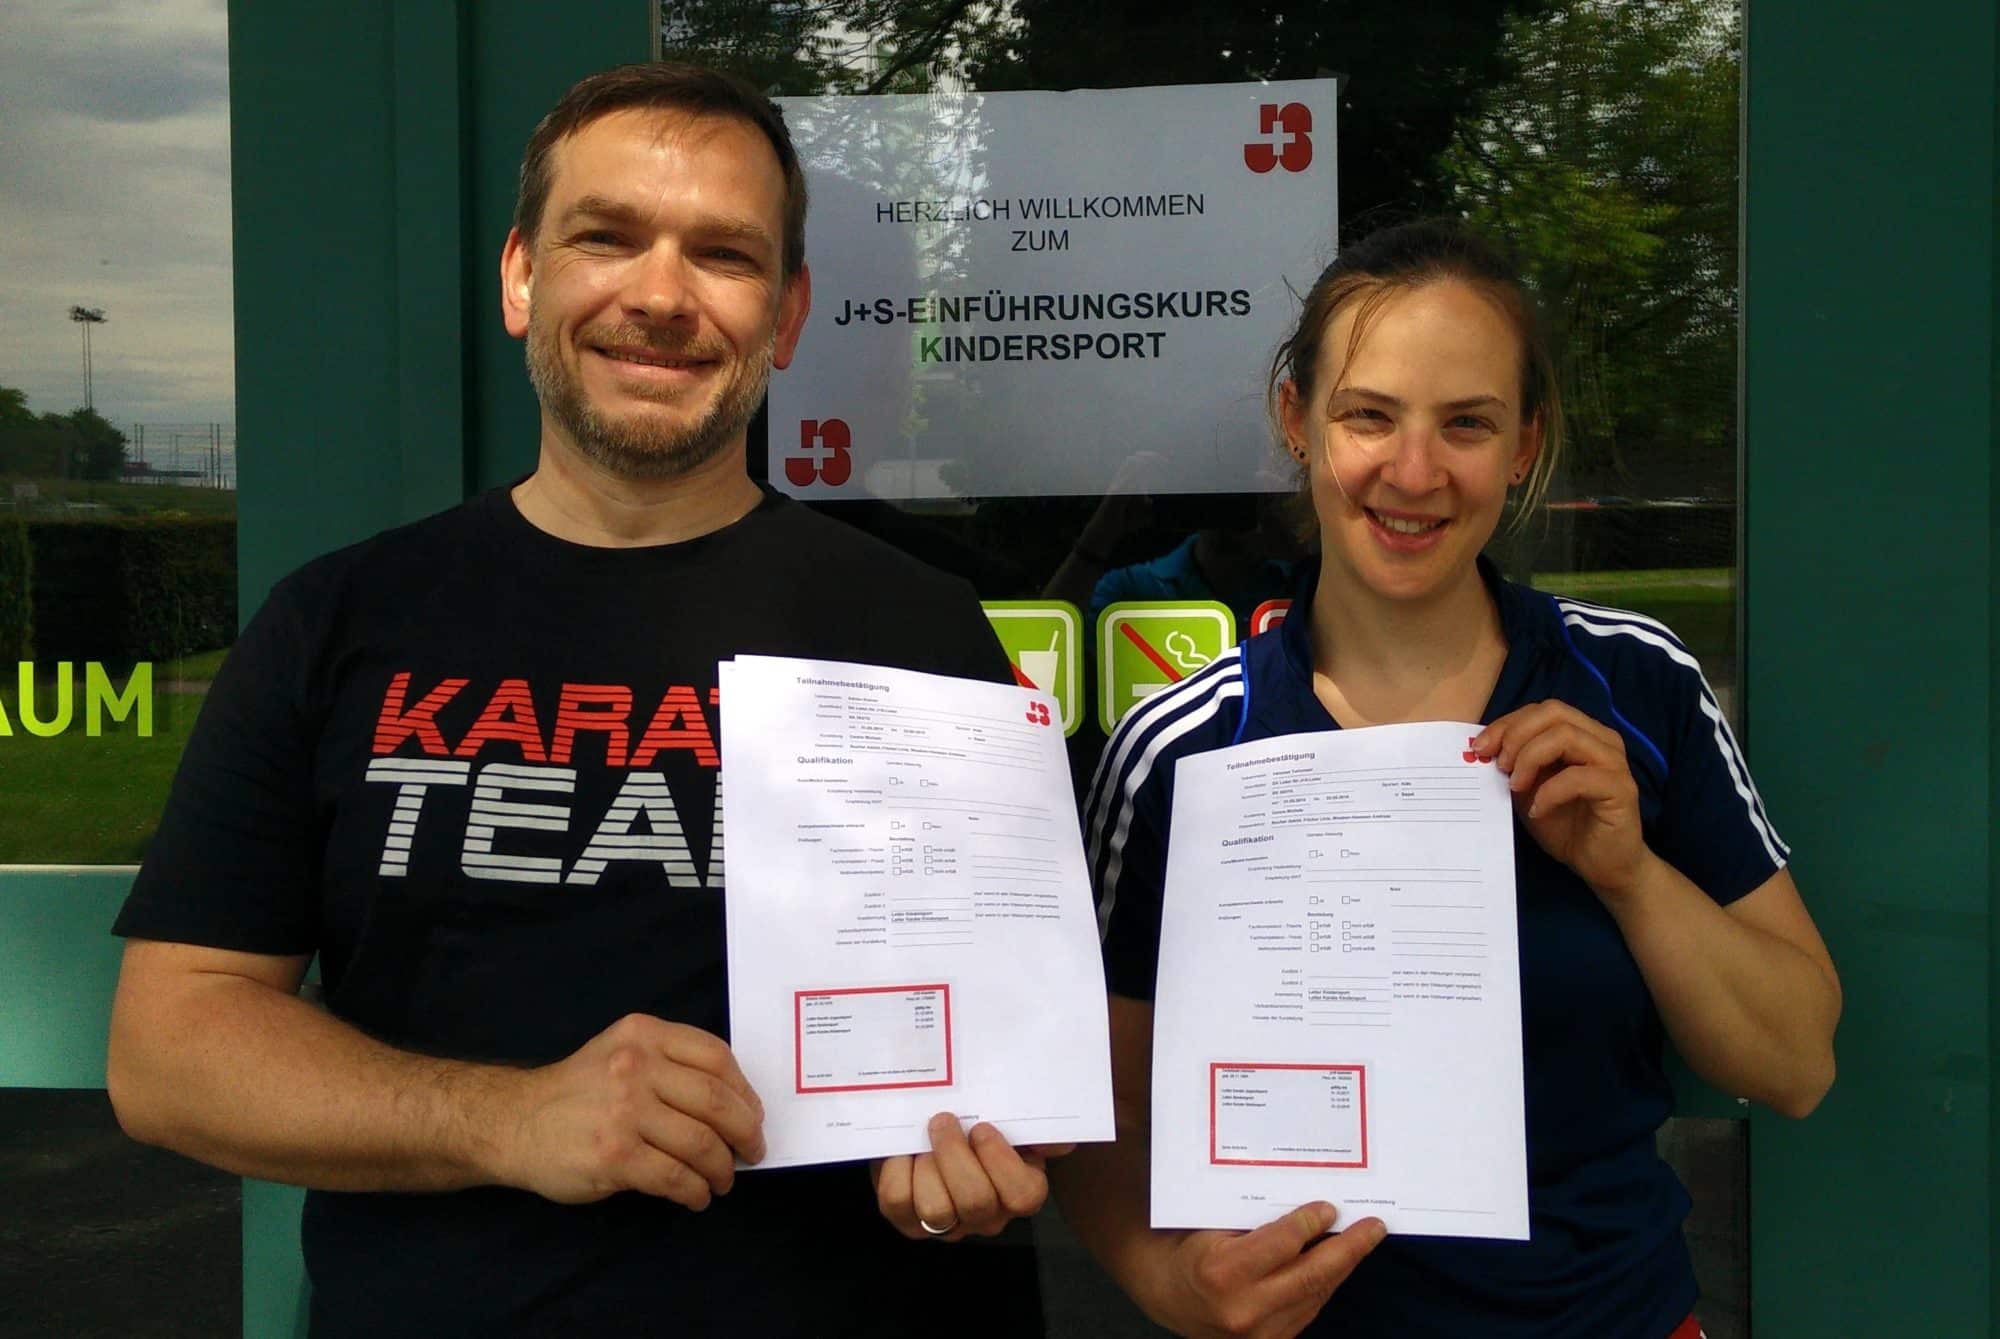 Karatekai Basel - Zwei weitere J+S Kindersport Leiter im Karatekai Basel